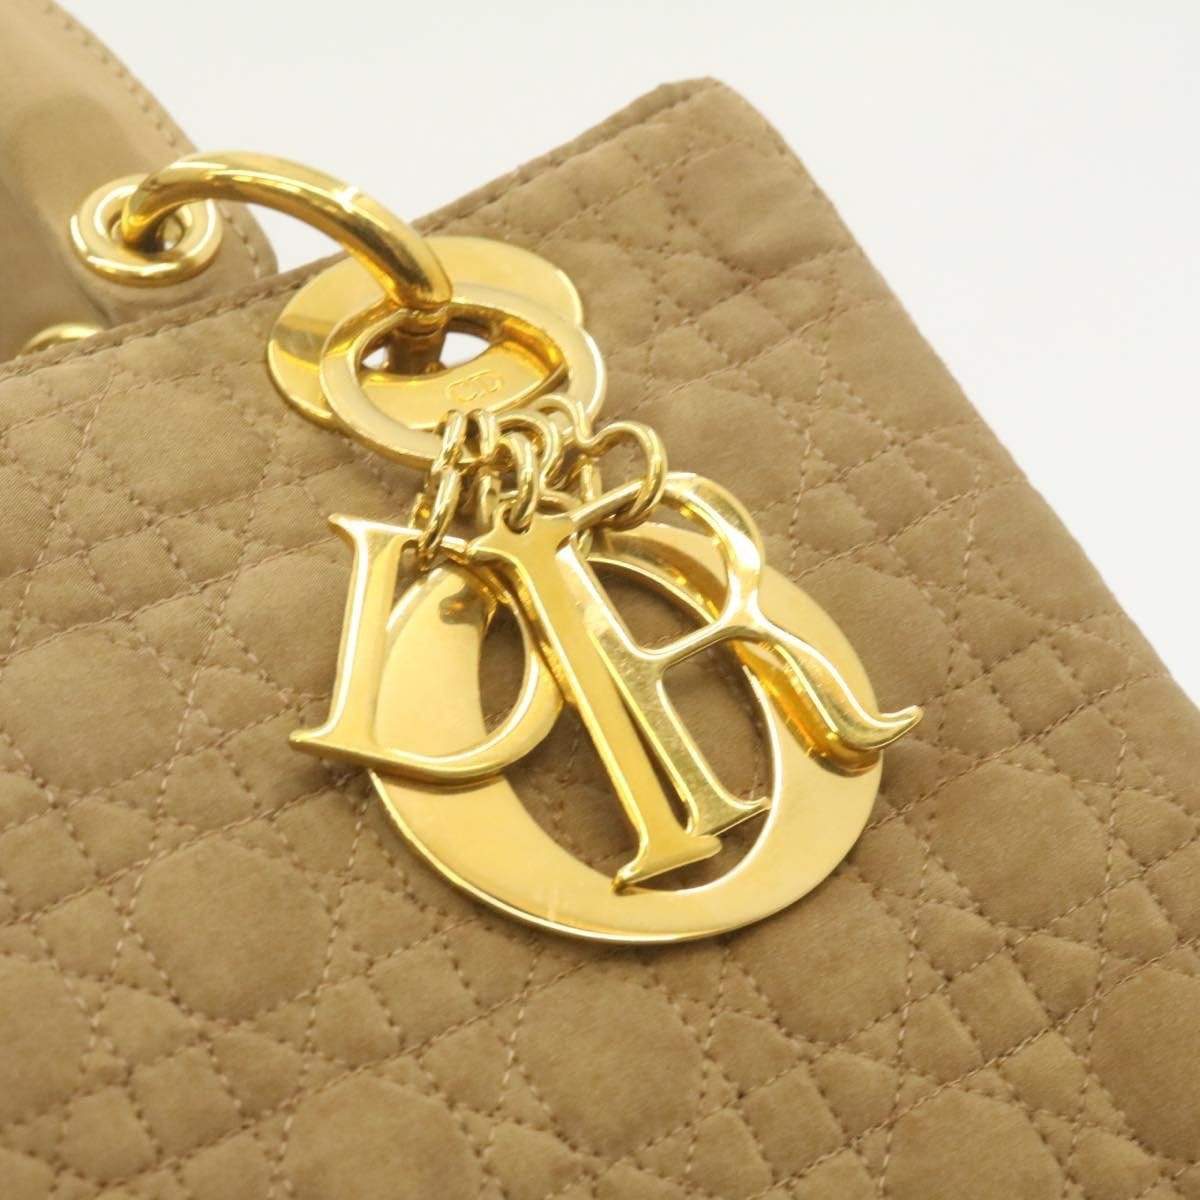 Christian Dior CHRISTIAN DIOR Lady Dior Canage Hand Bag Beige Nylon Auth 21829 - AWL1091